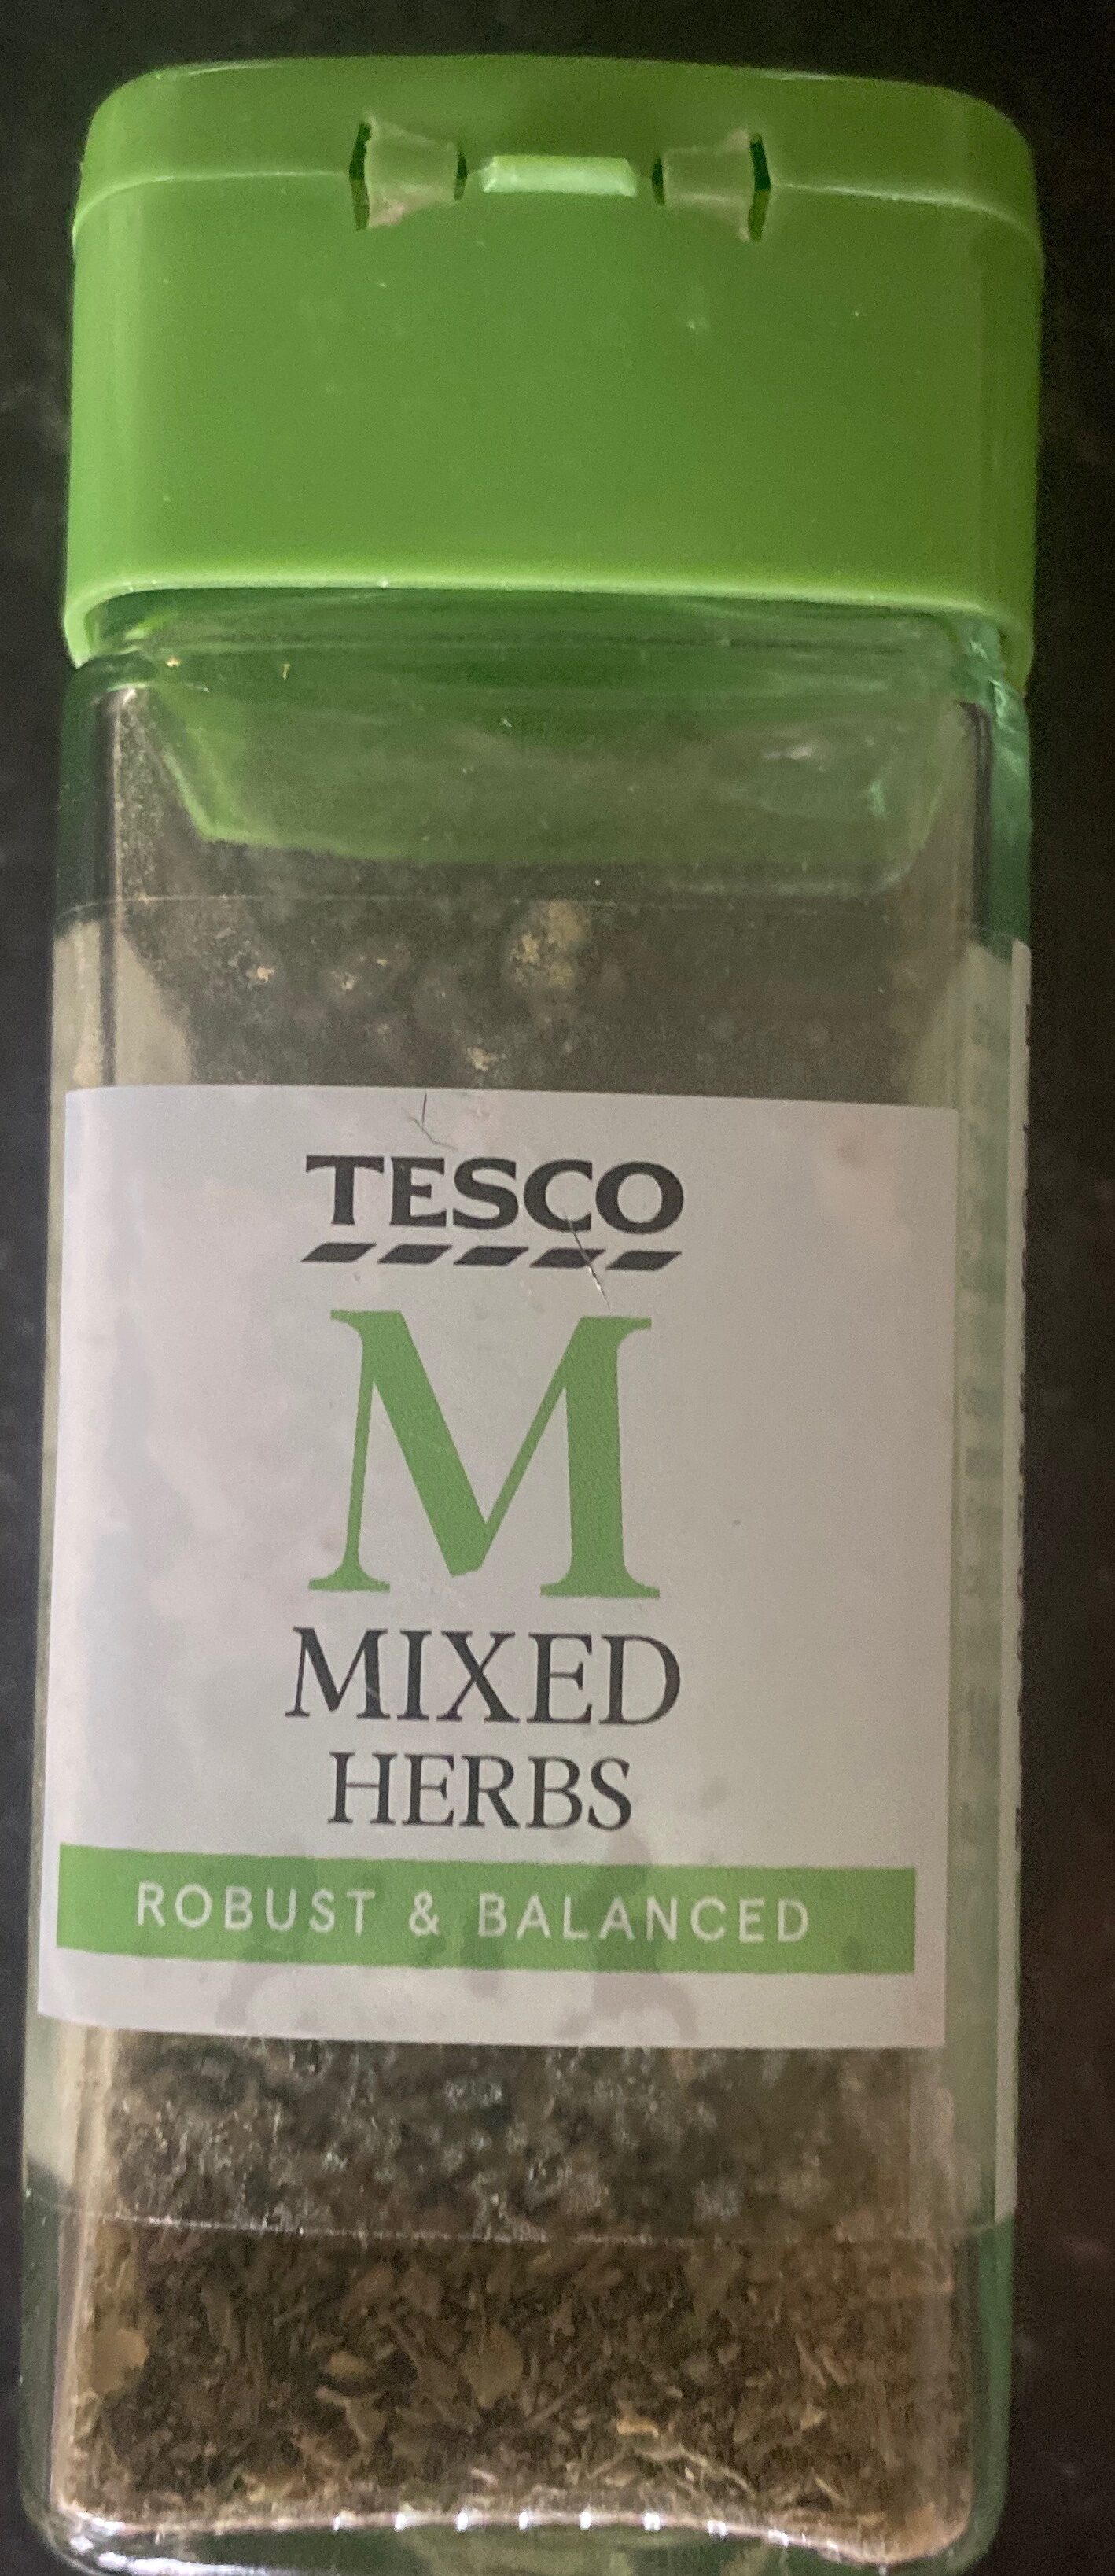 Mixed Herbs - Producto - en